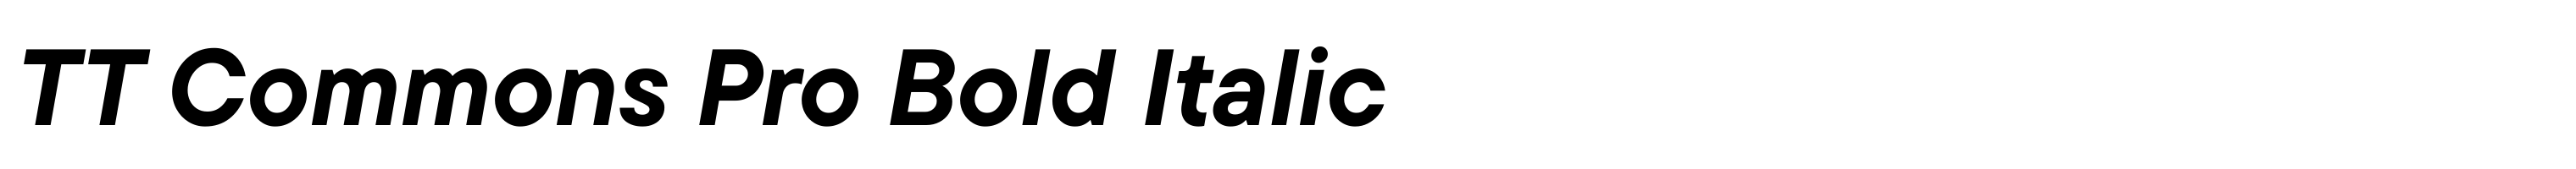 TT Commons Pro Bold Italic